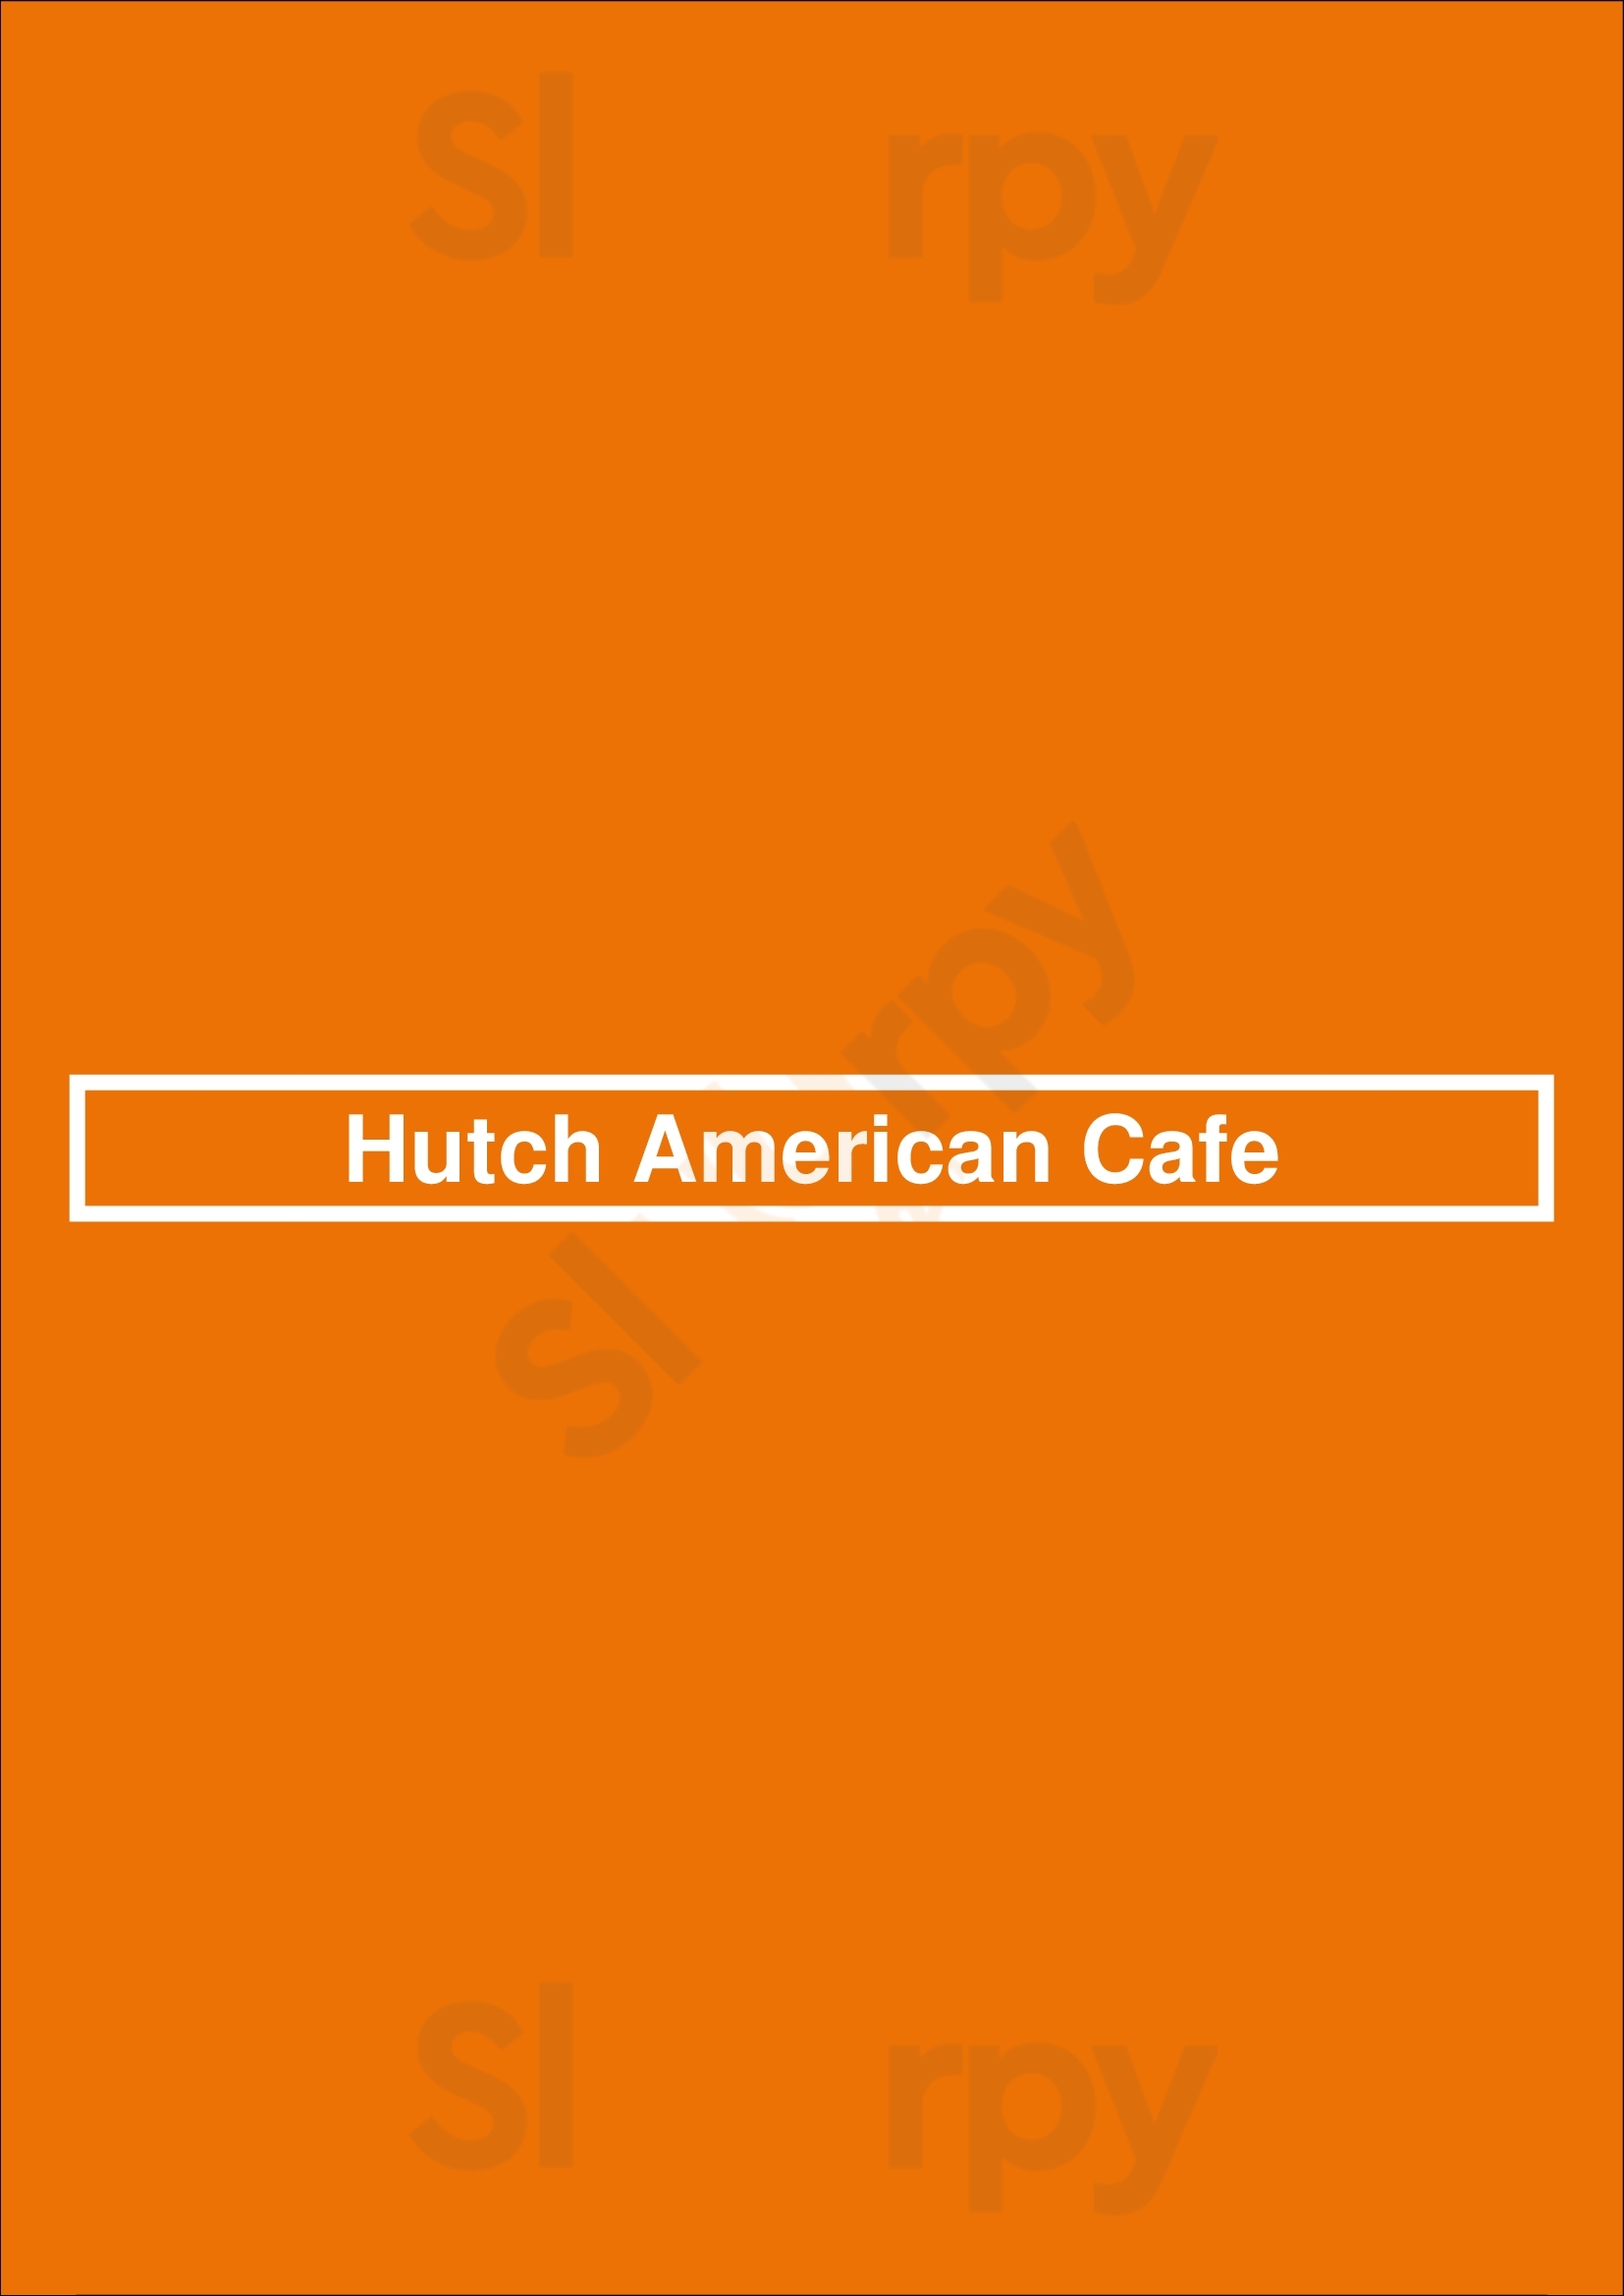 Hutch American Cafe Chicago Menu - 1